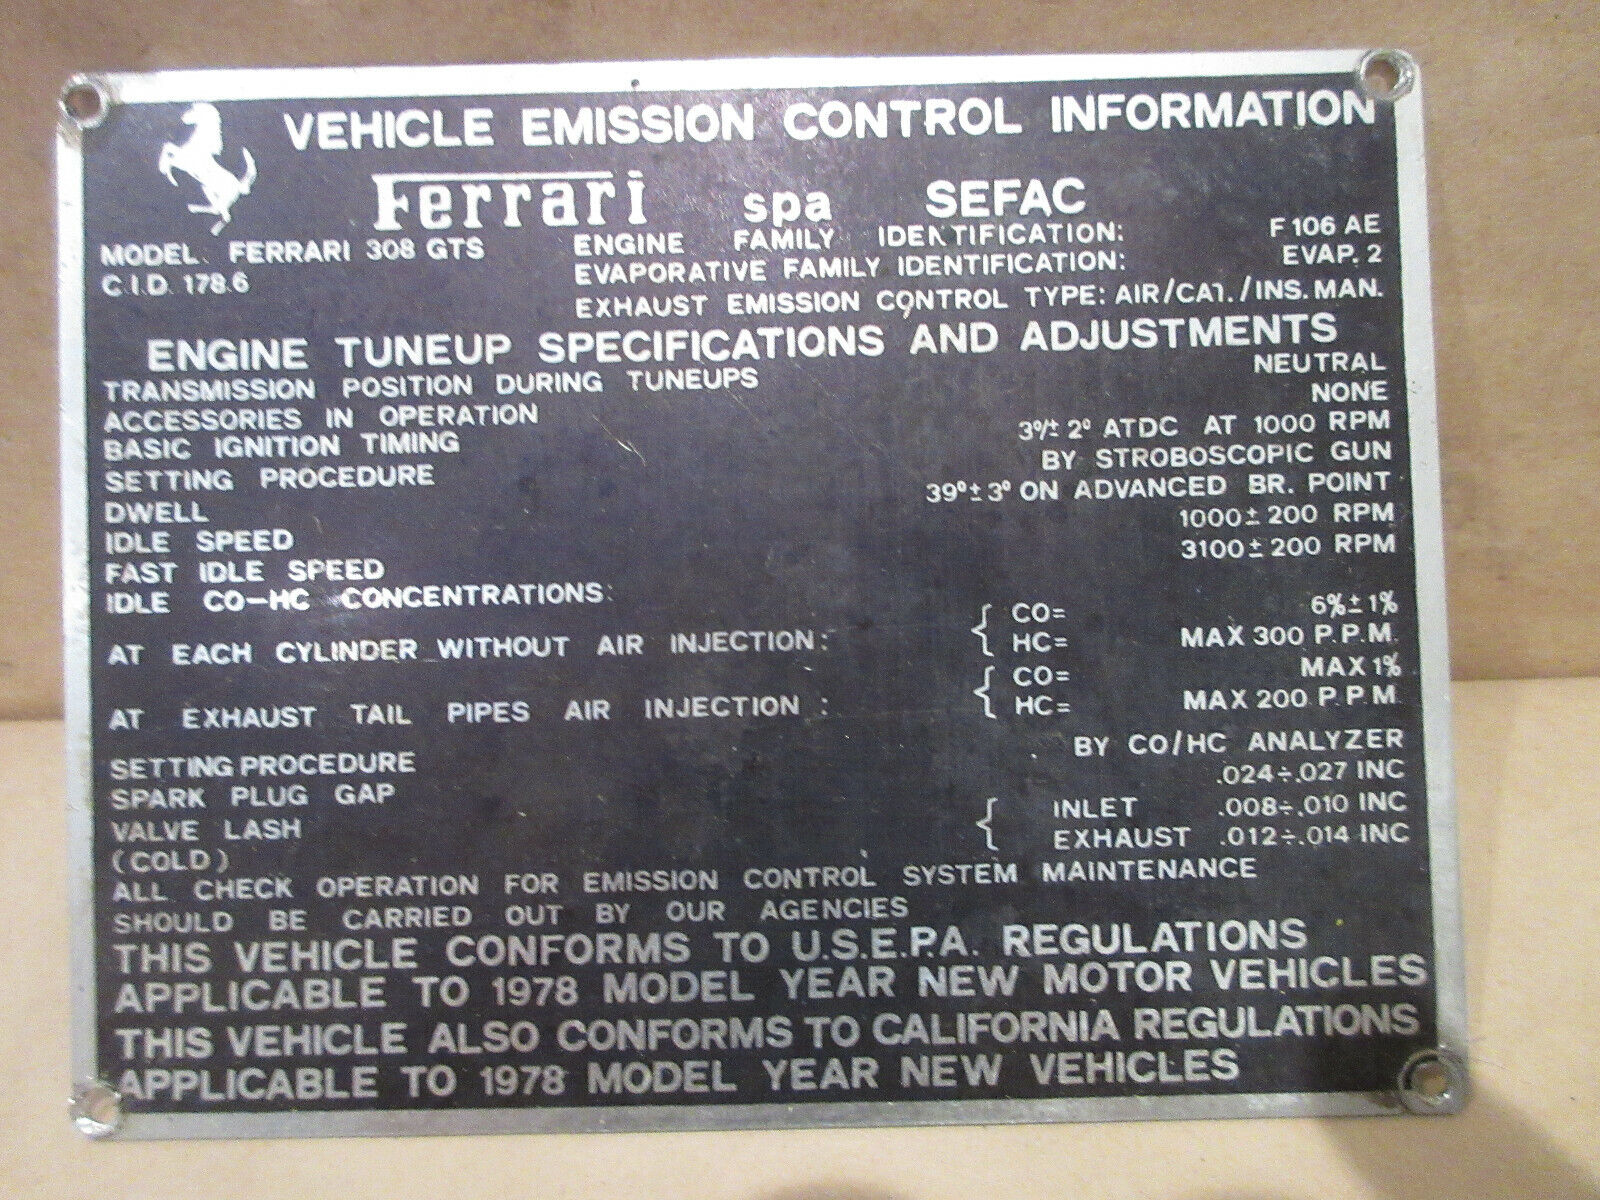 Ferrari 308 GTS Vehicle Emission Control Information Plate